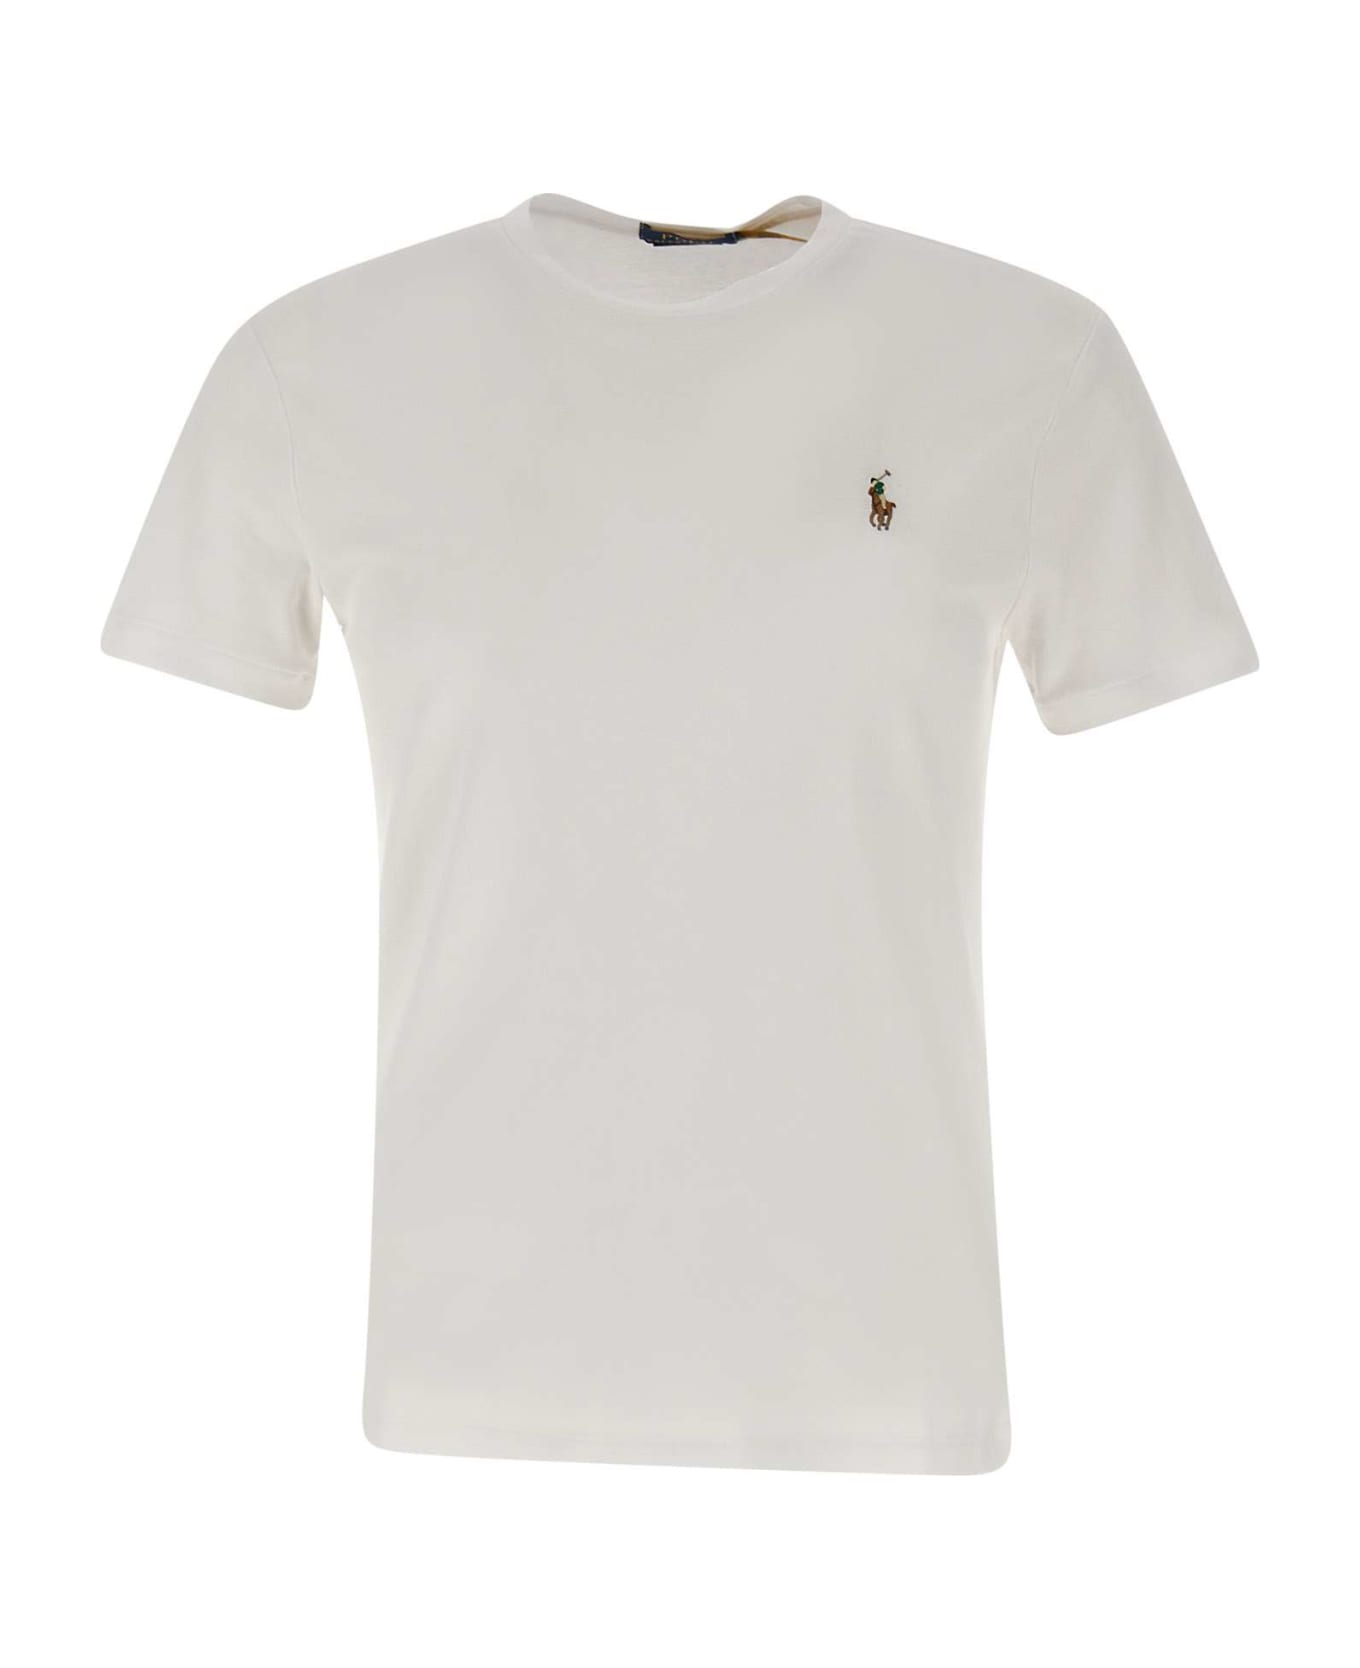 Polo Ralph Lauren Cotton T-shirt - WHITE